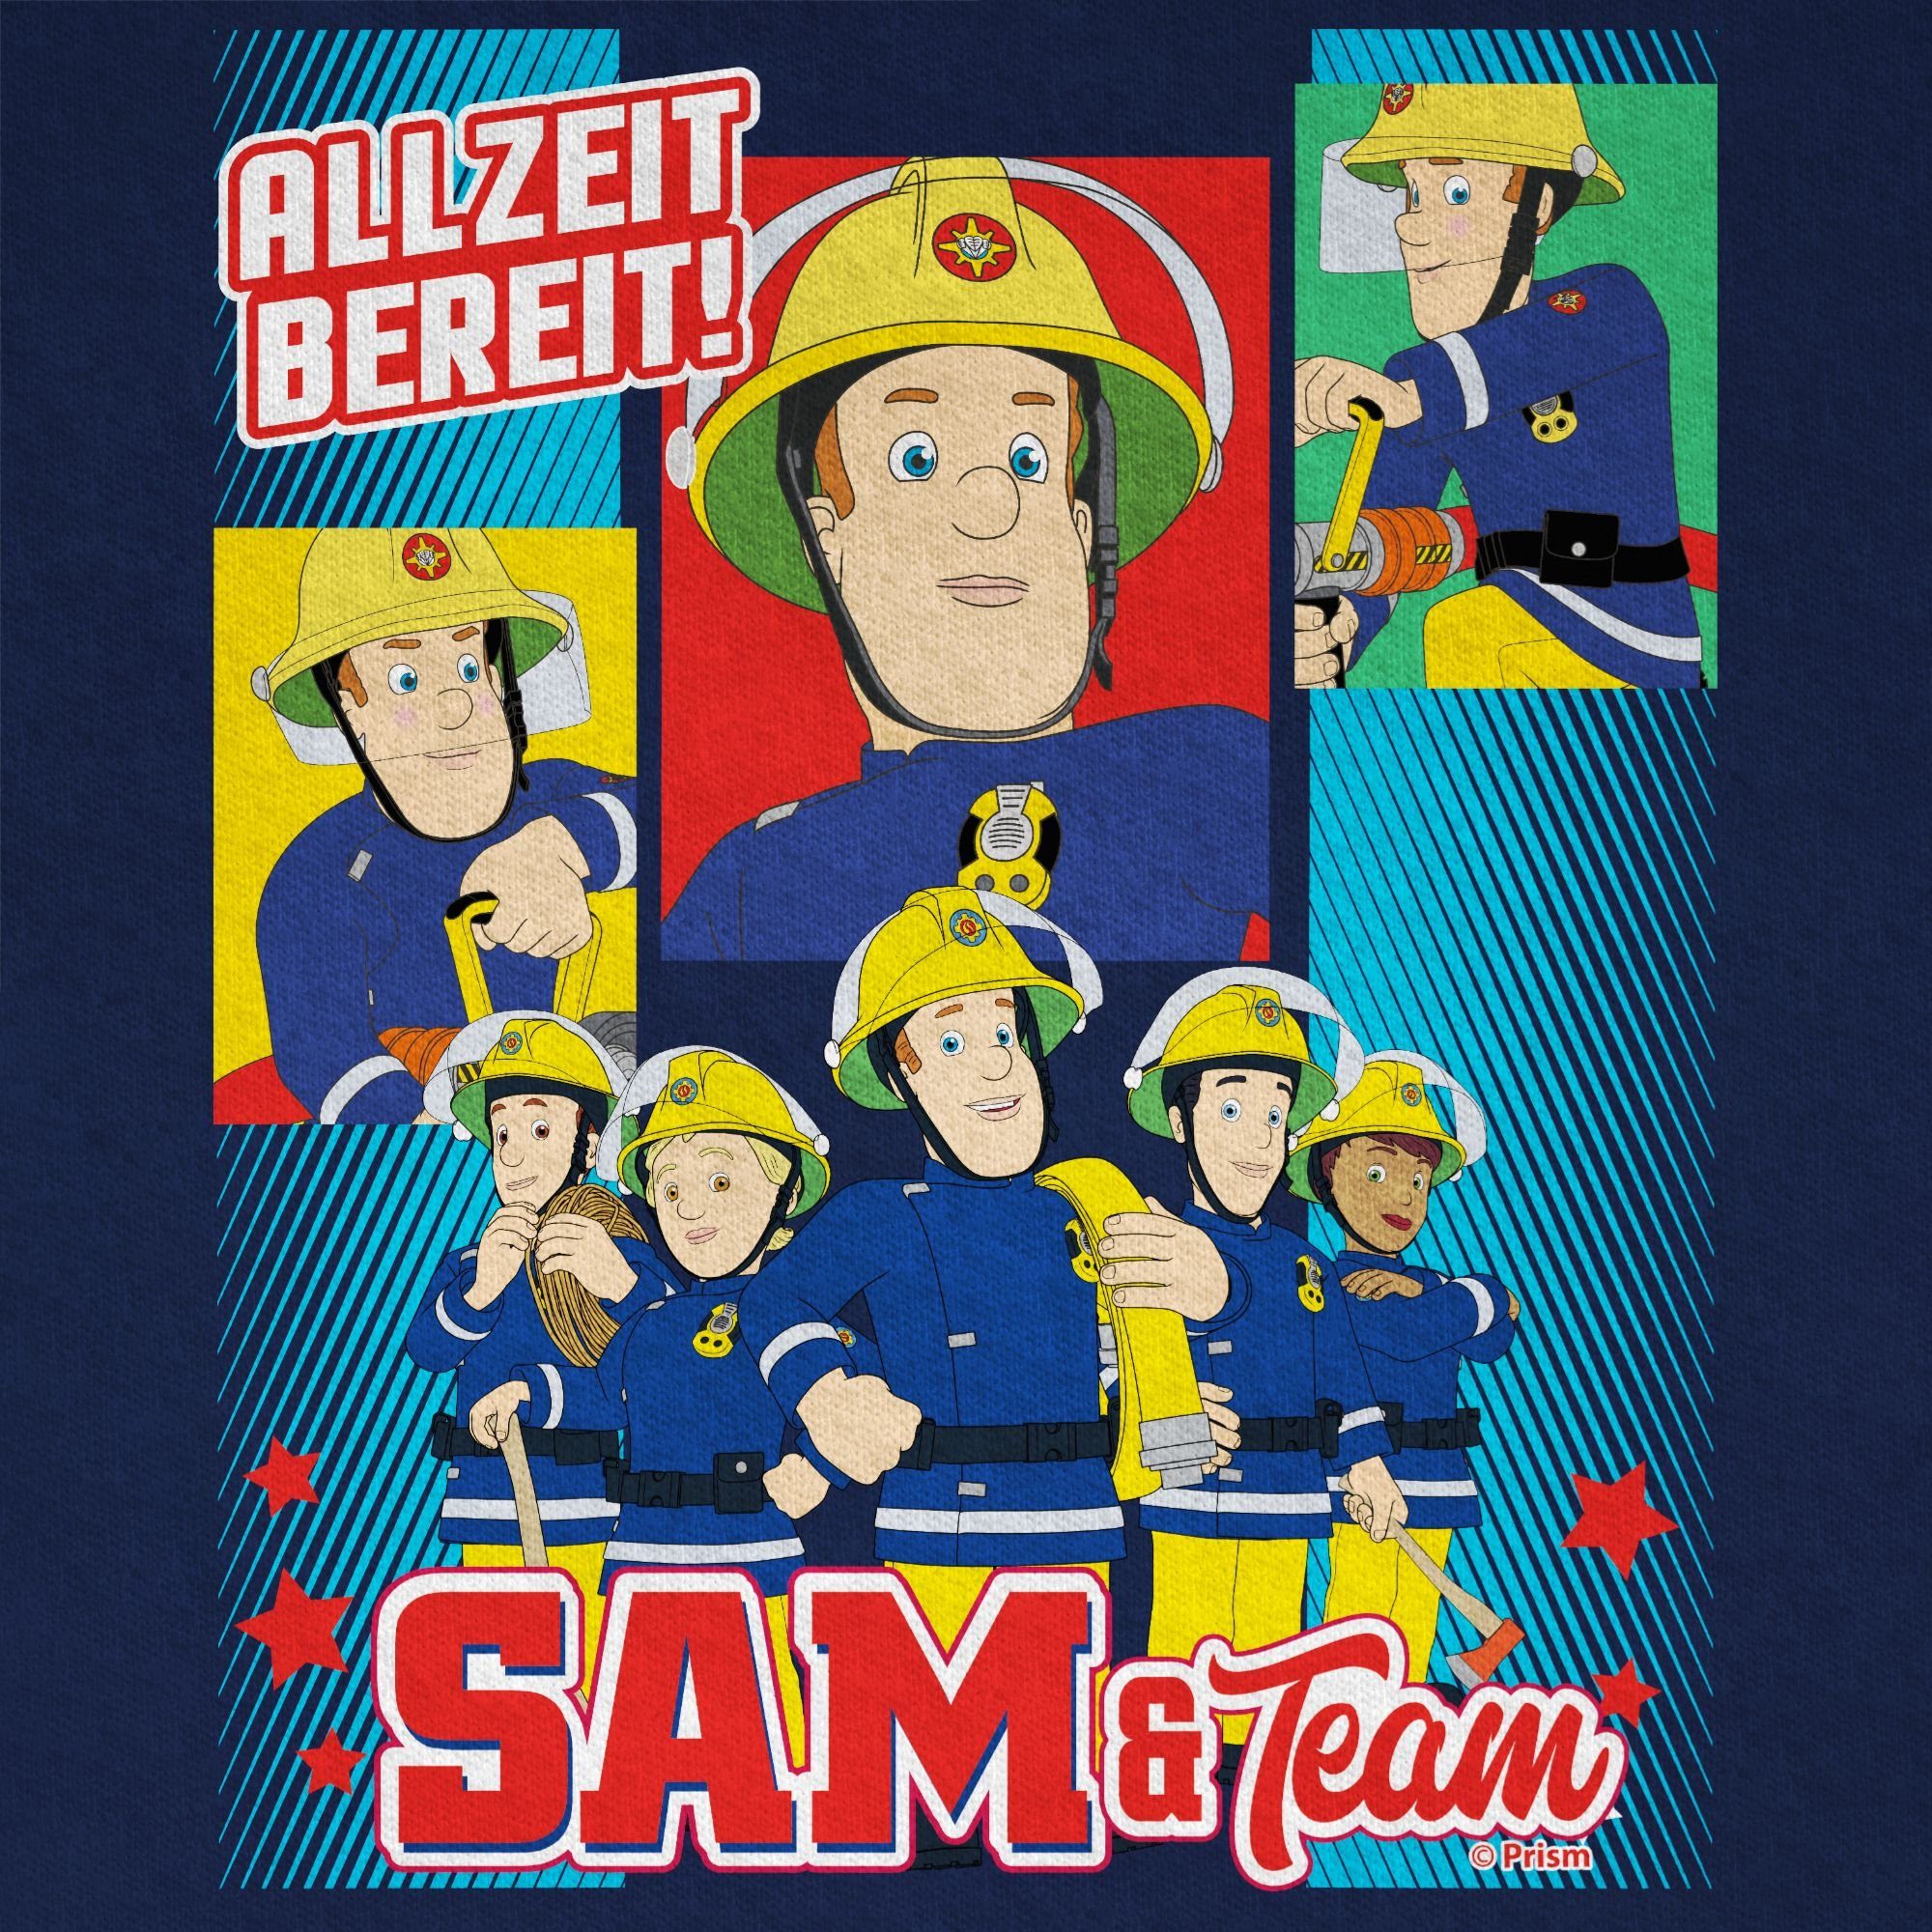 Shirtracer T-Shirt Allzeit bereit! - Sam Dunkelblau Jungen Feuerwehrmann Team 03 Sam &